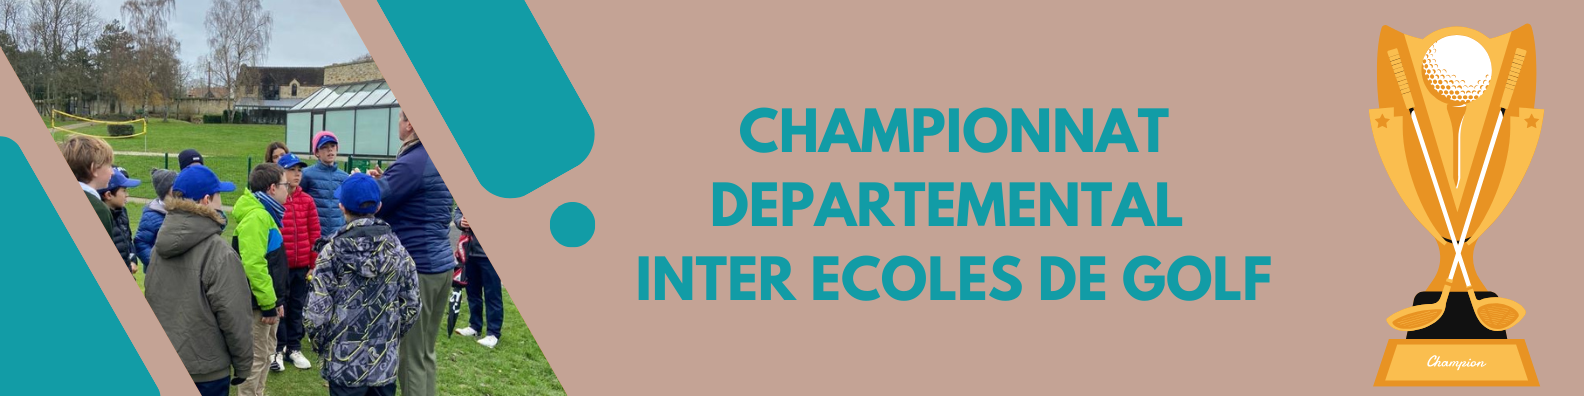 CHAMPIONNAT DEPARTEMENTAL  INTER ECOLES DE GOLF